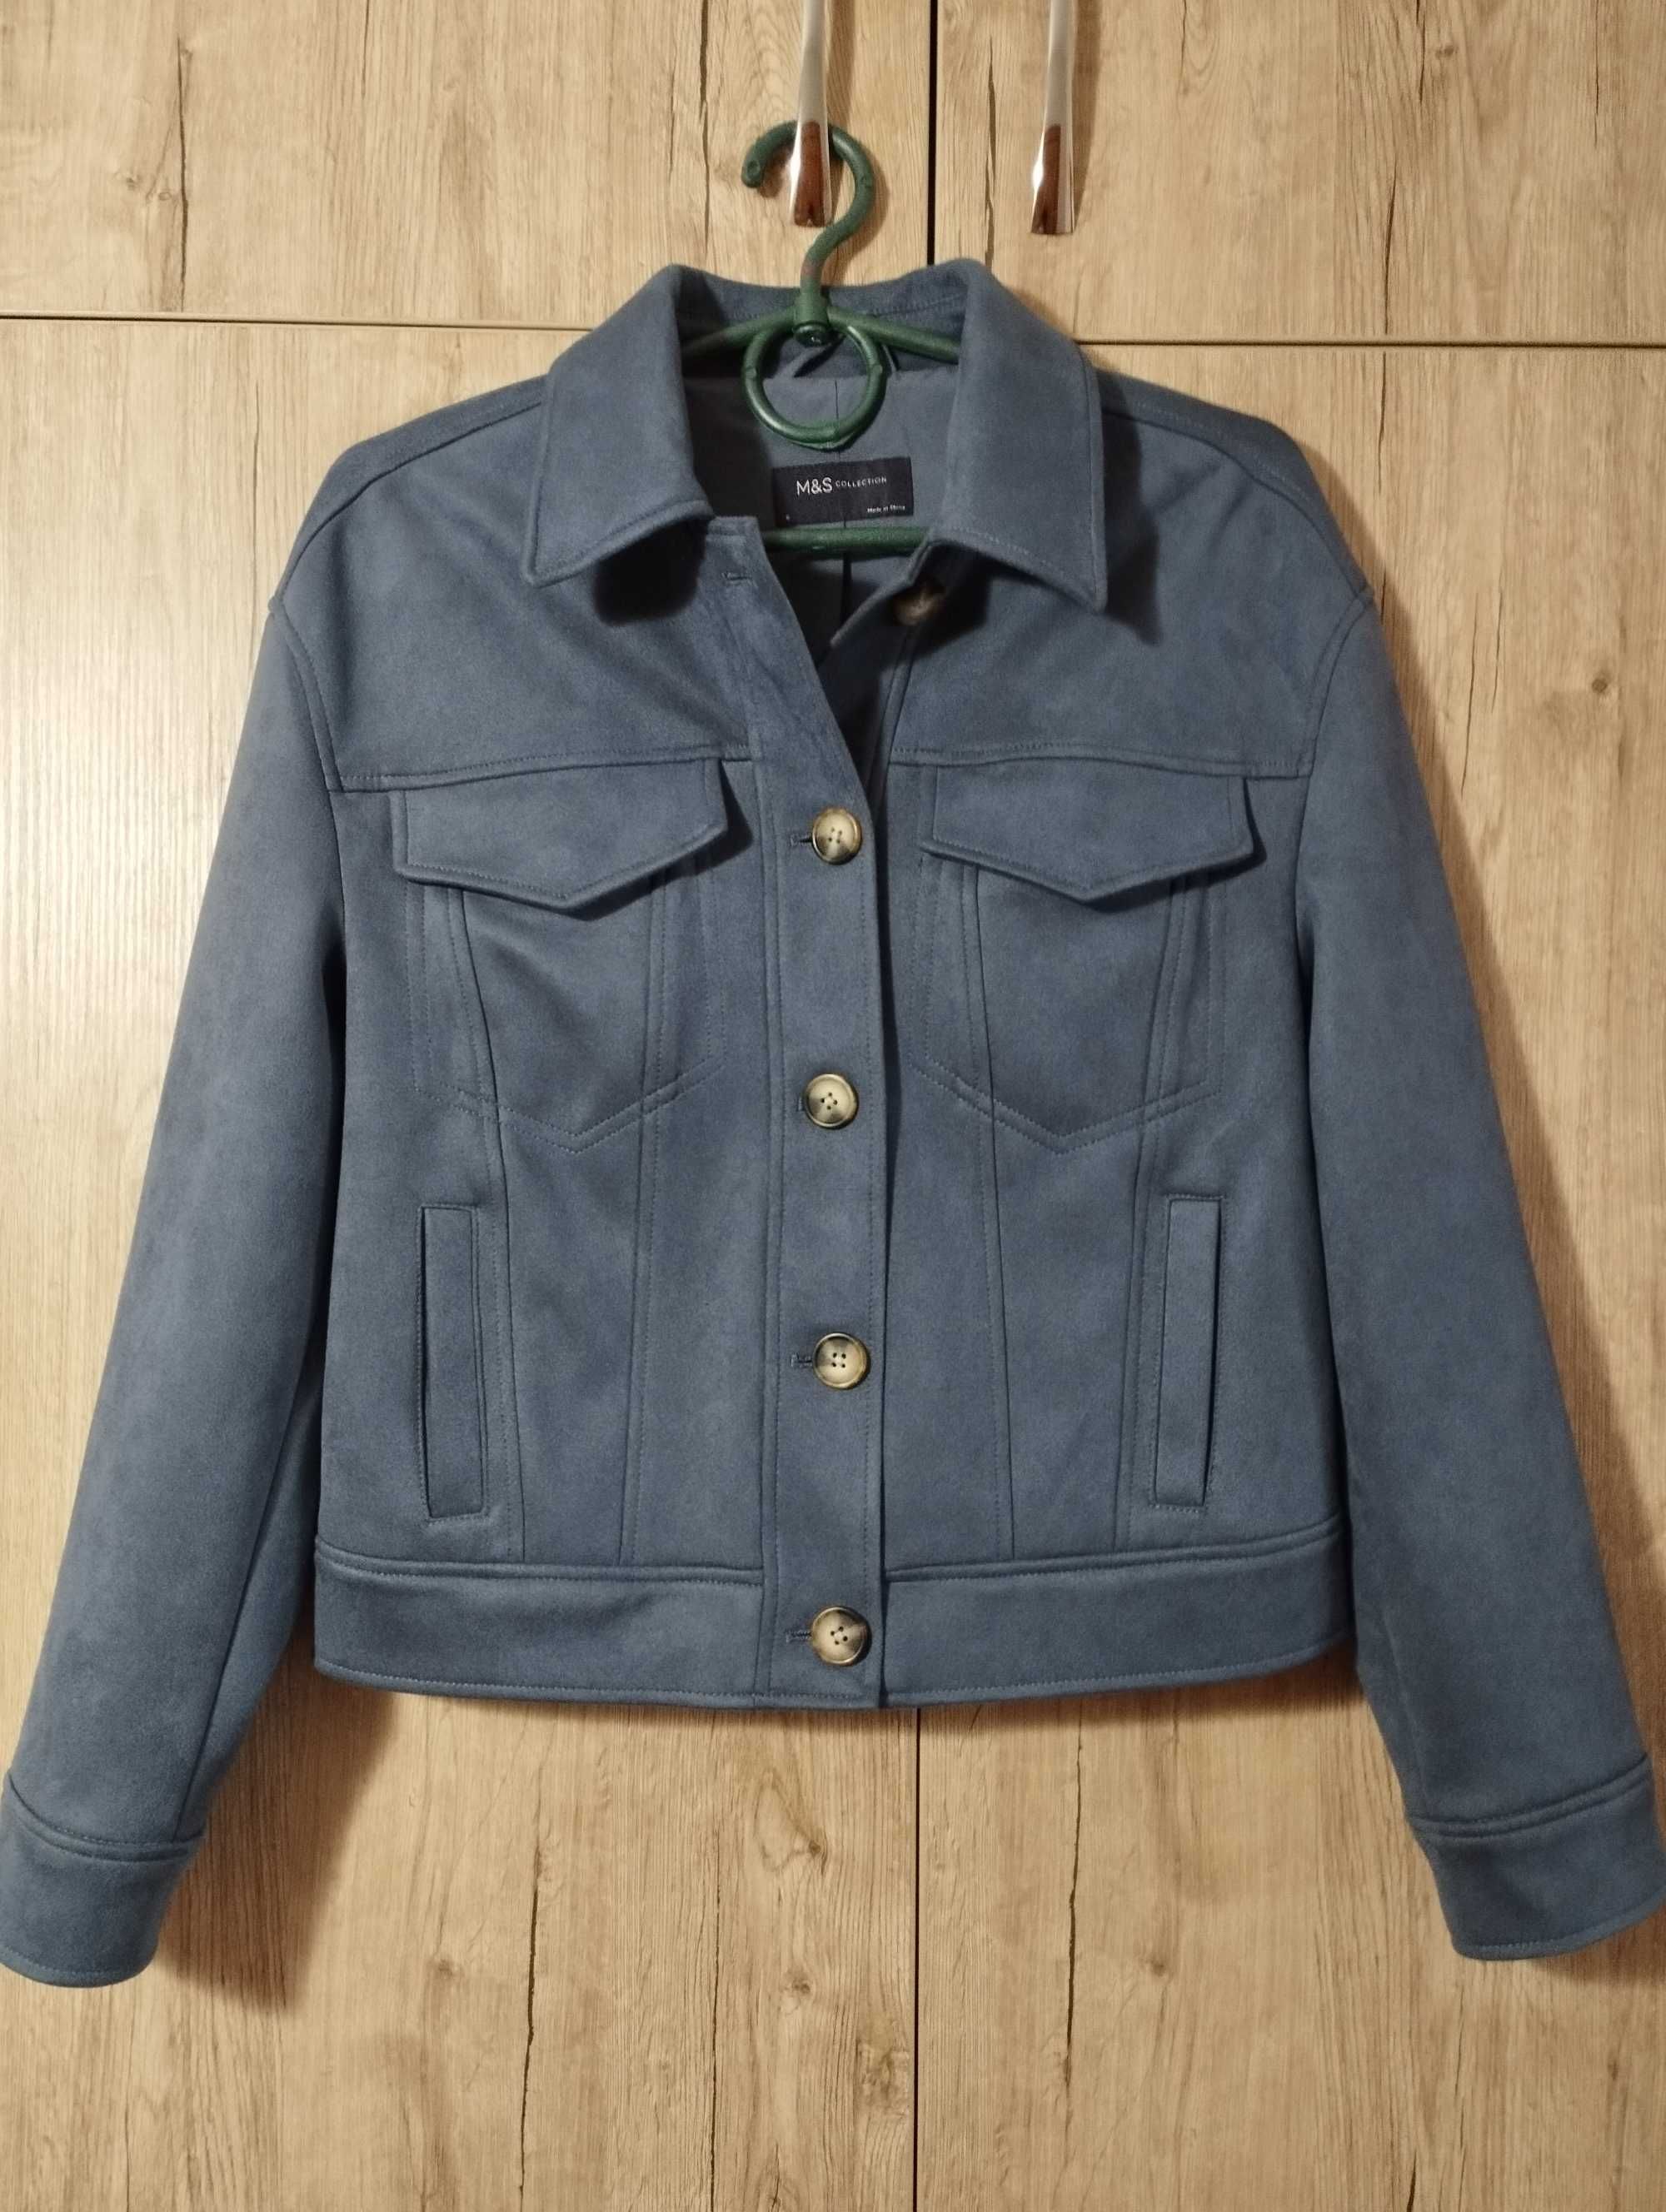 Стильный пиджак куртка маркс енд спенсер M&S. Розмір 34-36.